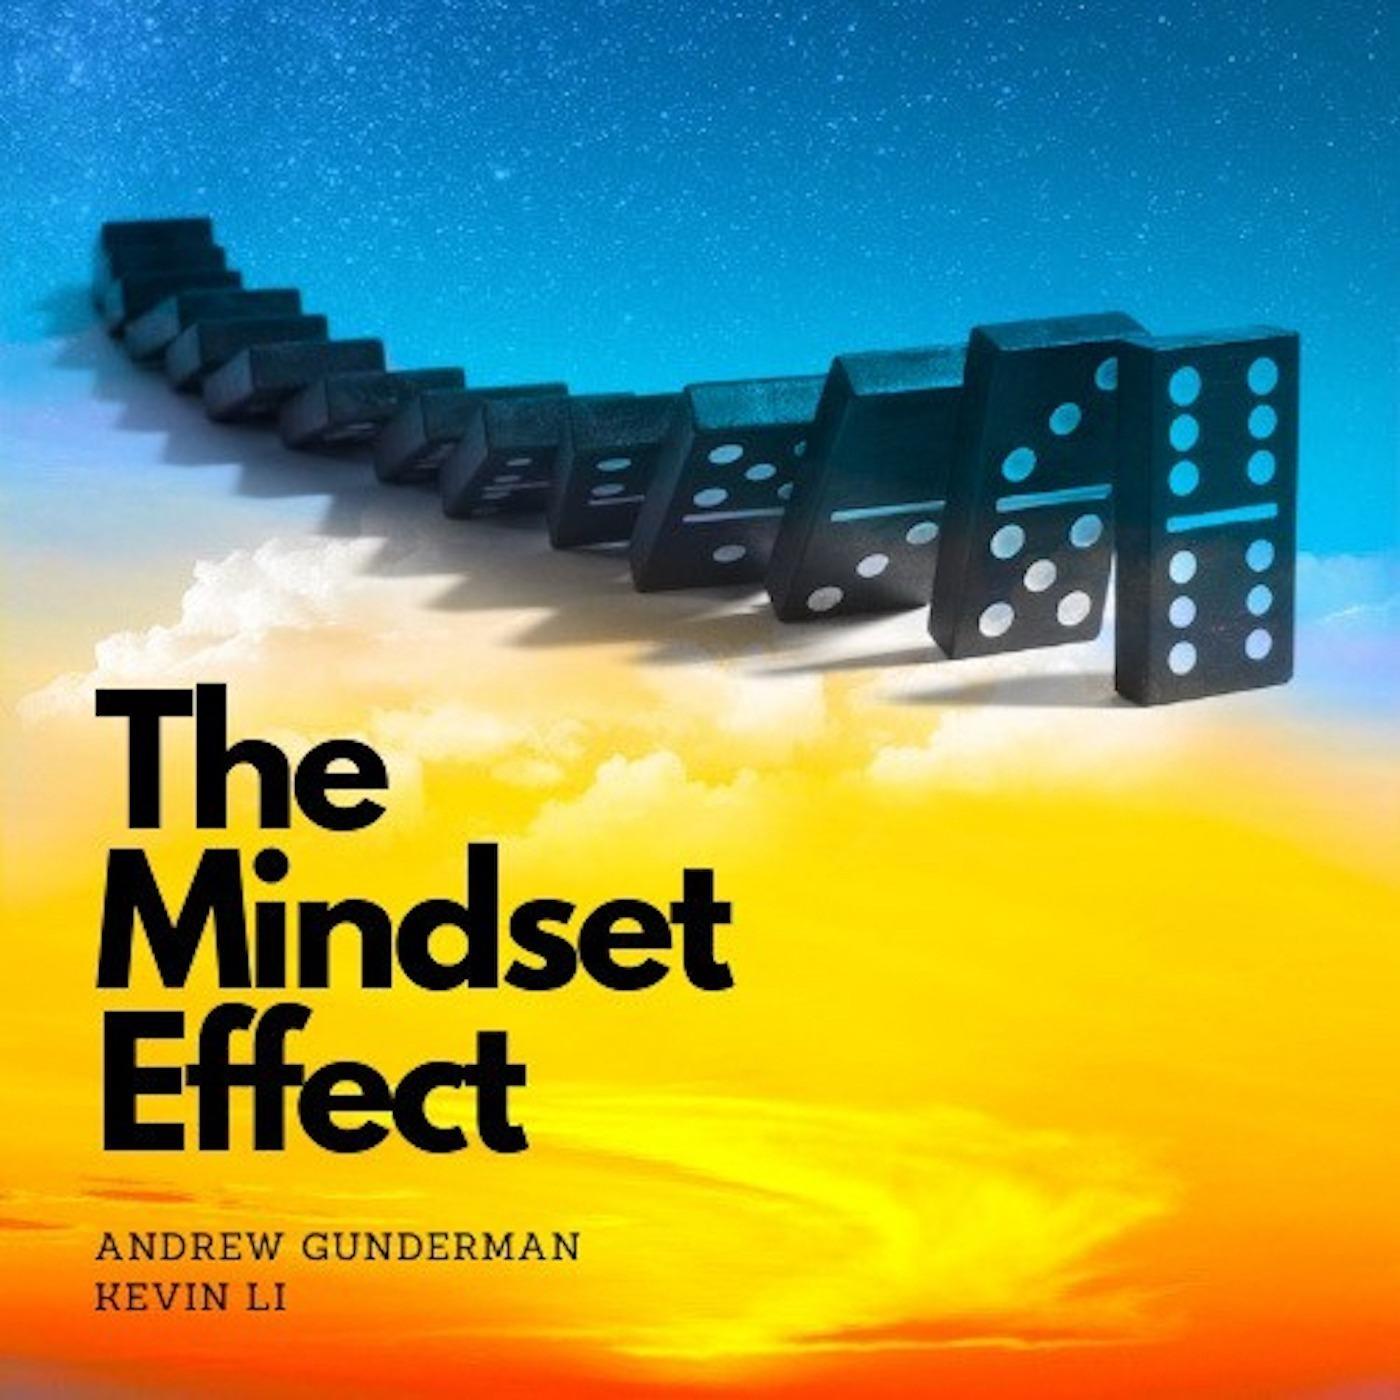 The Mindset Effect